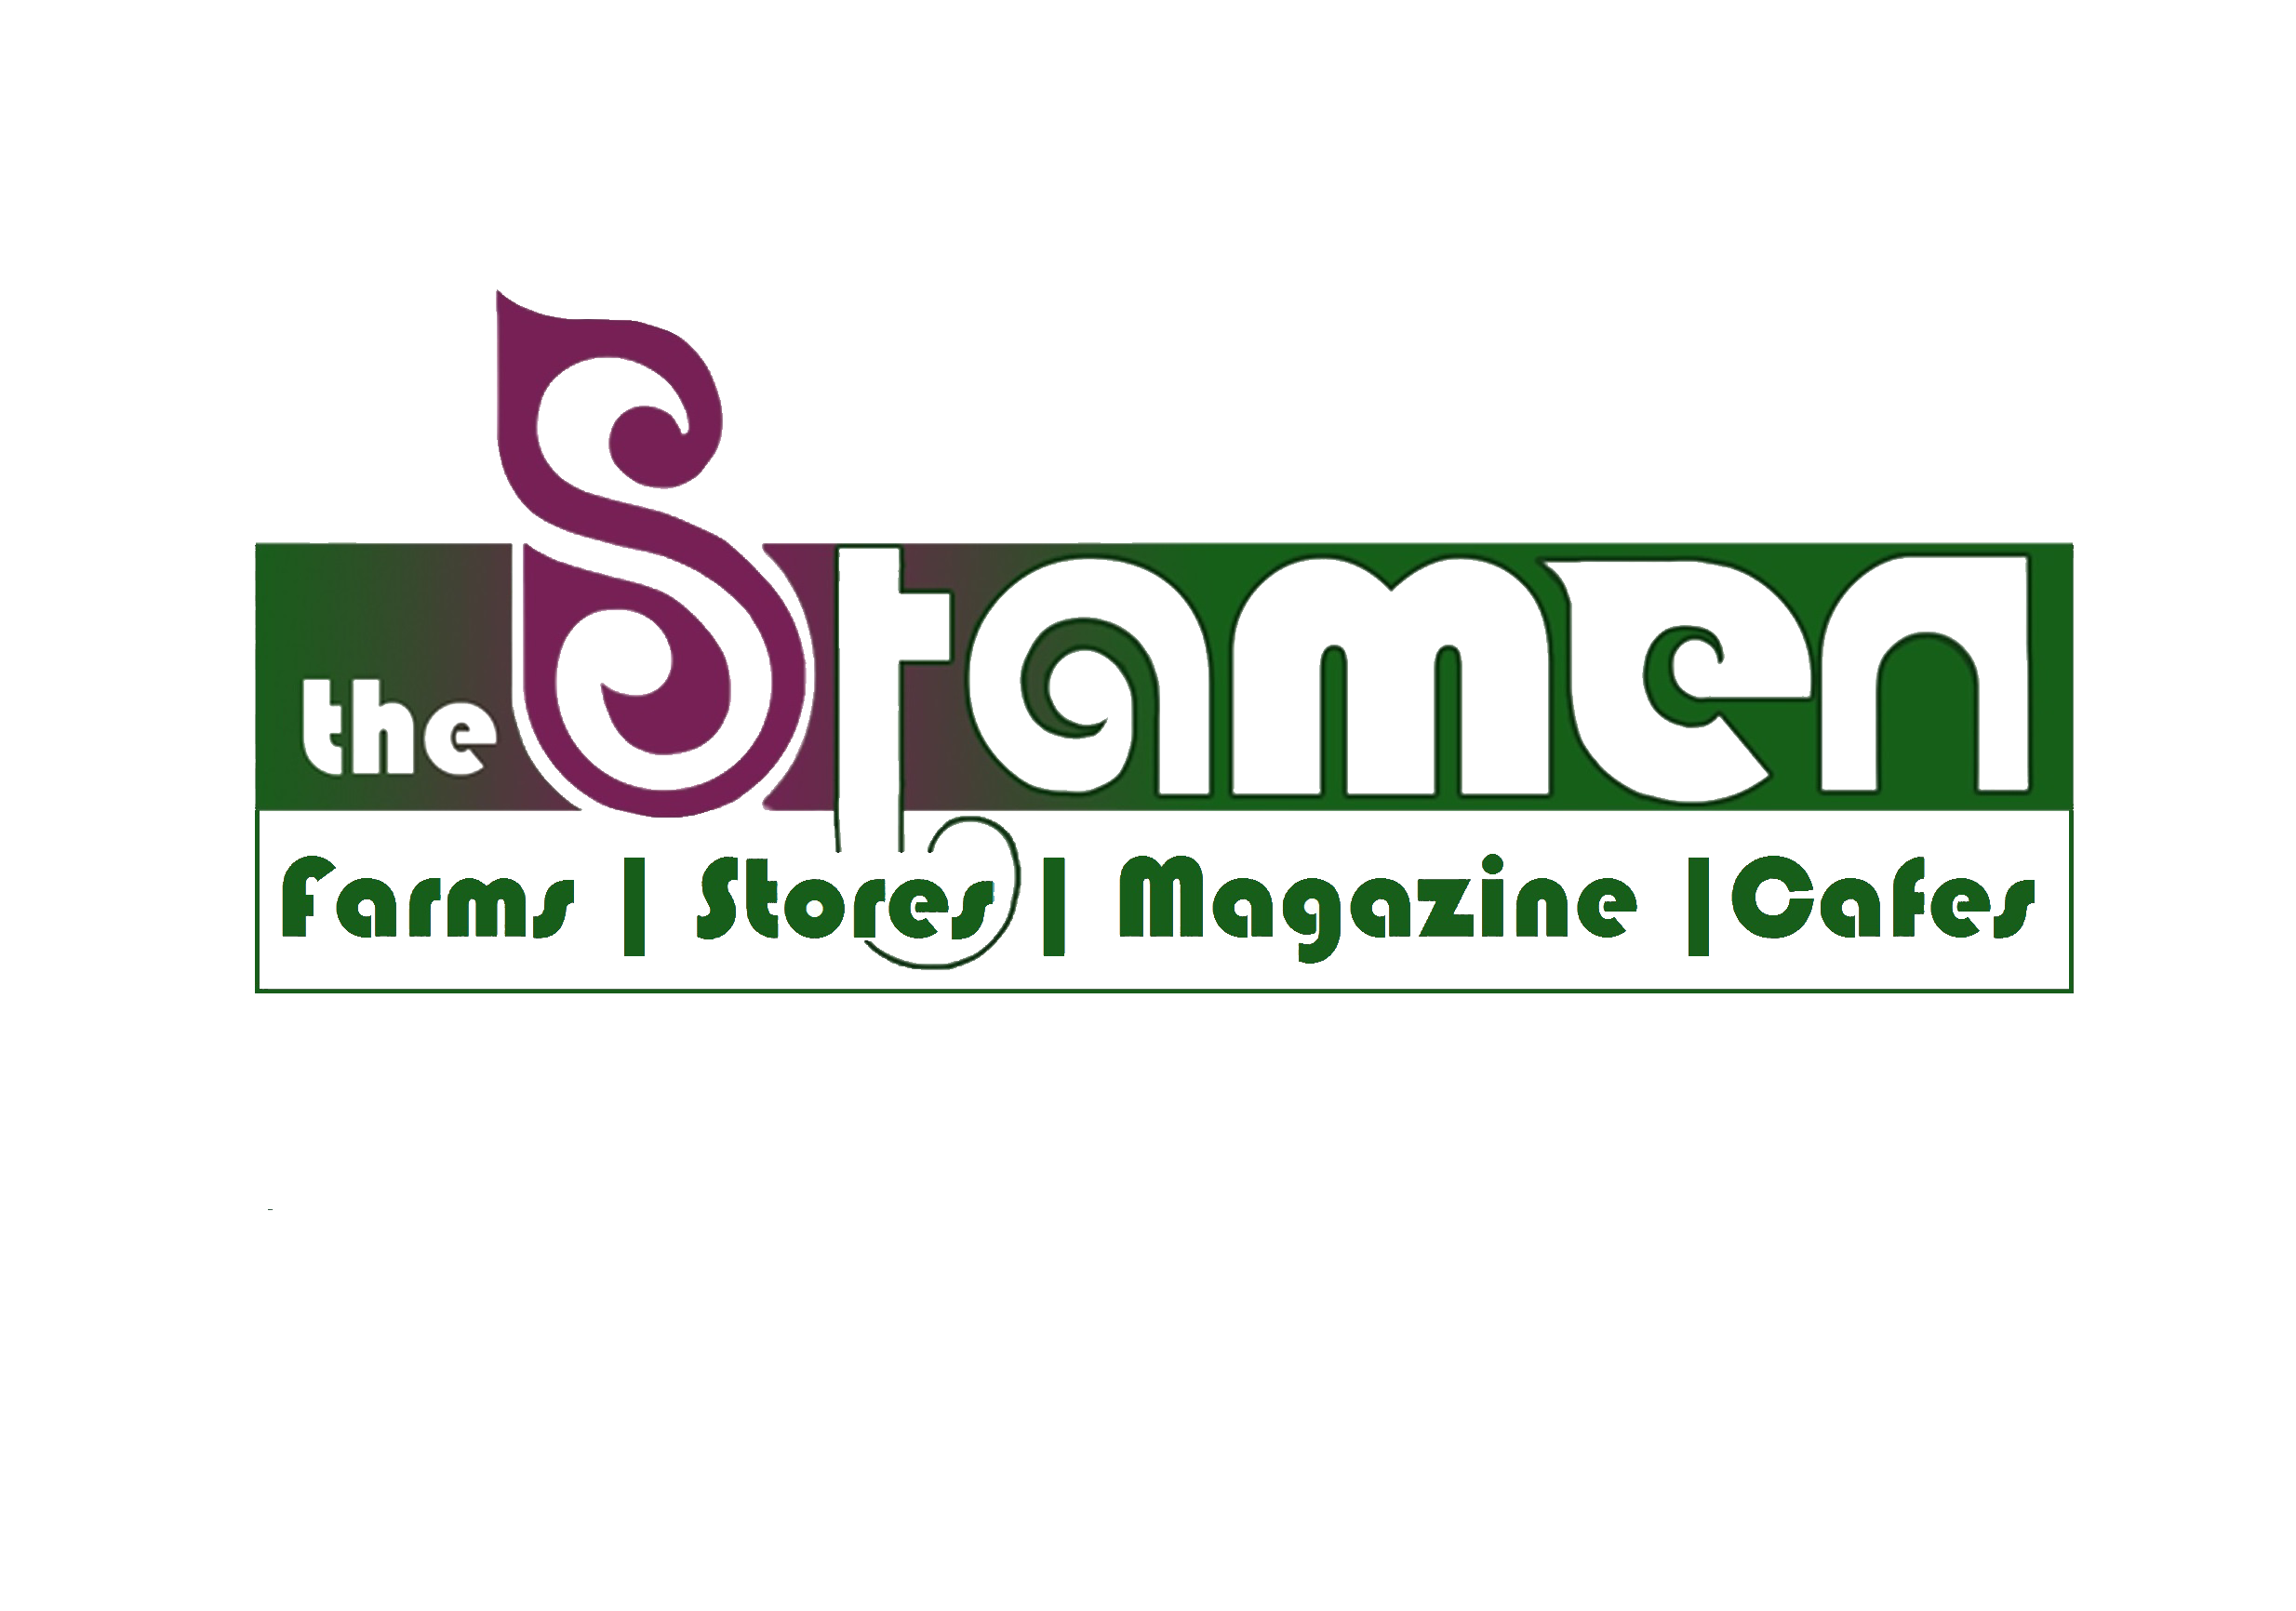 About Stamen